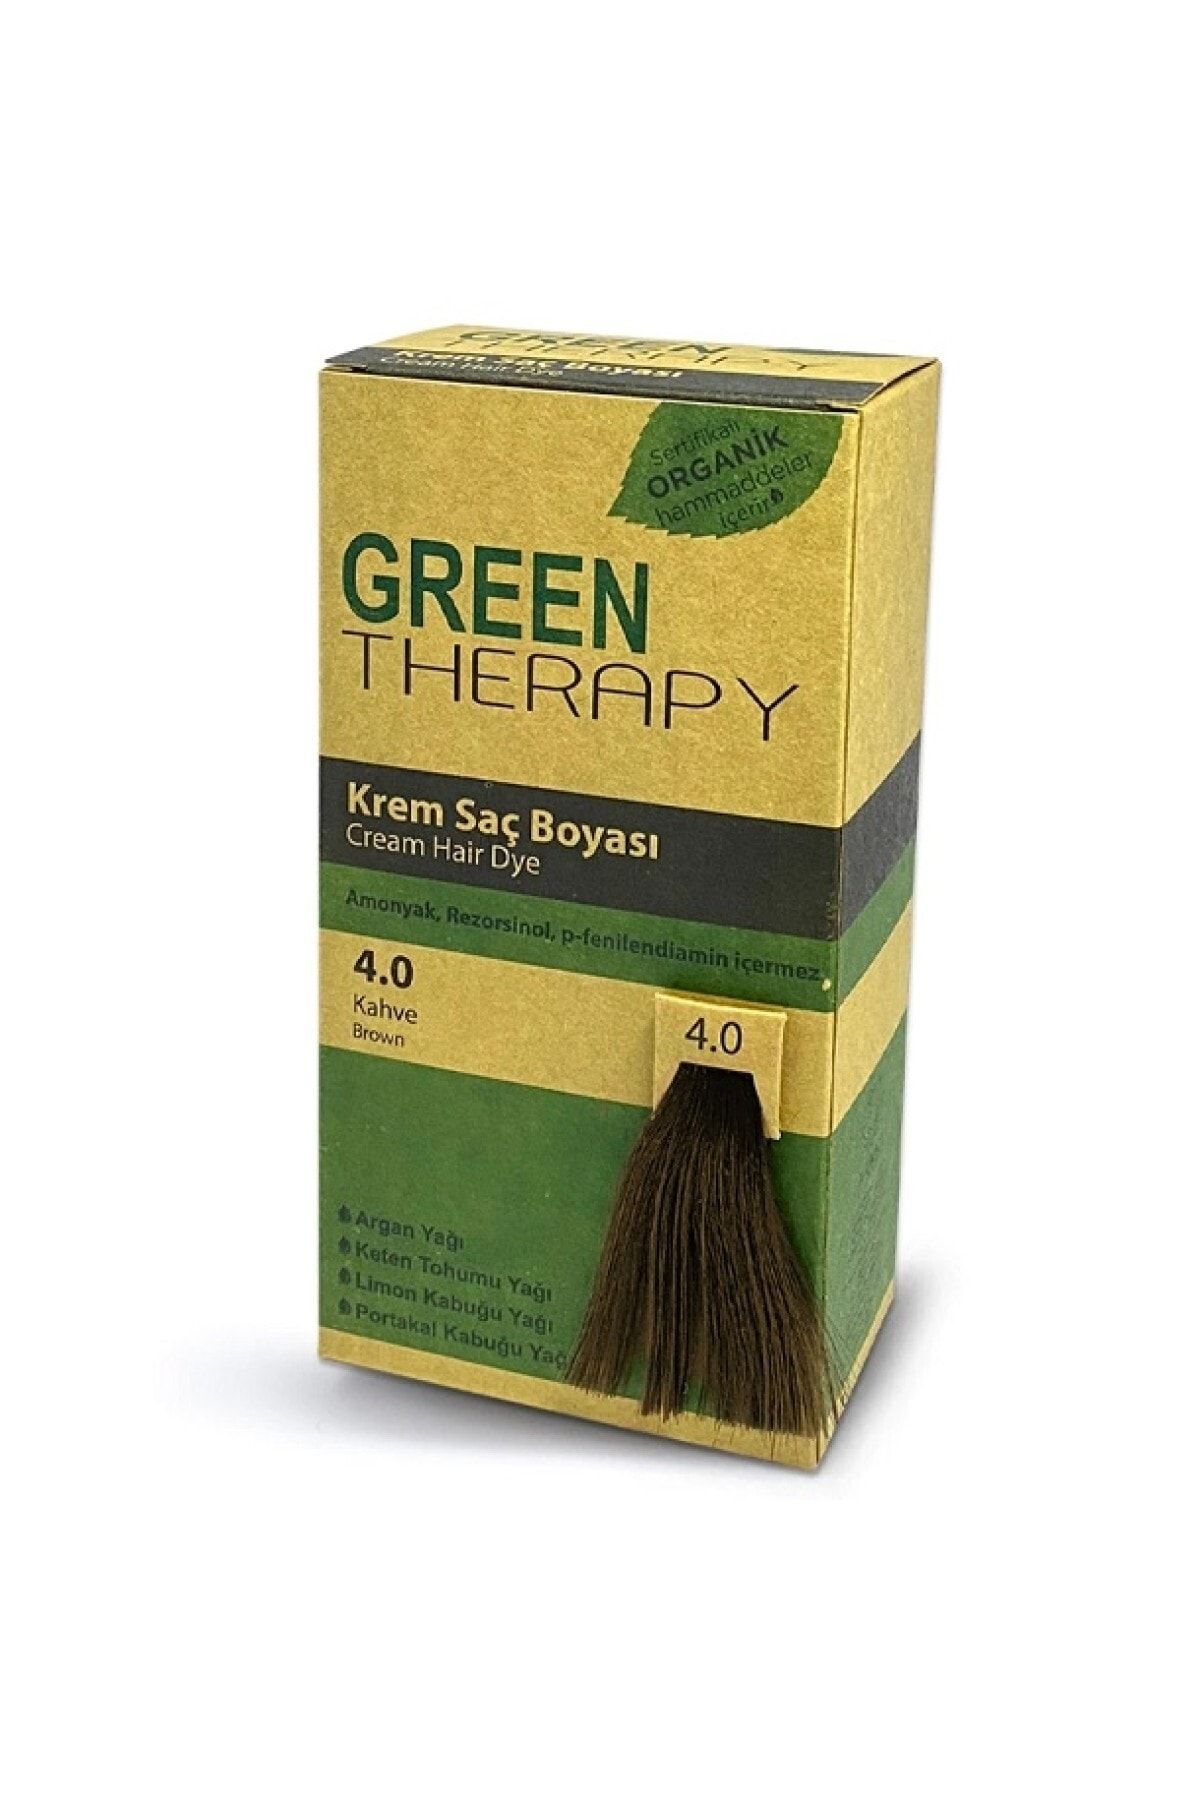 Green Therapy Krem Saç Boyası 4.0 Kahve